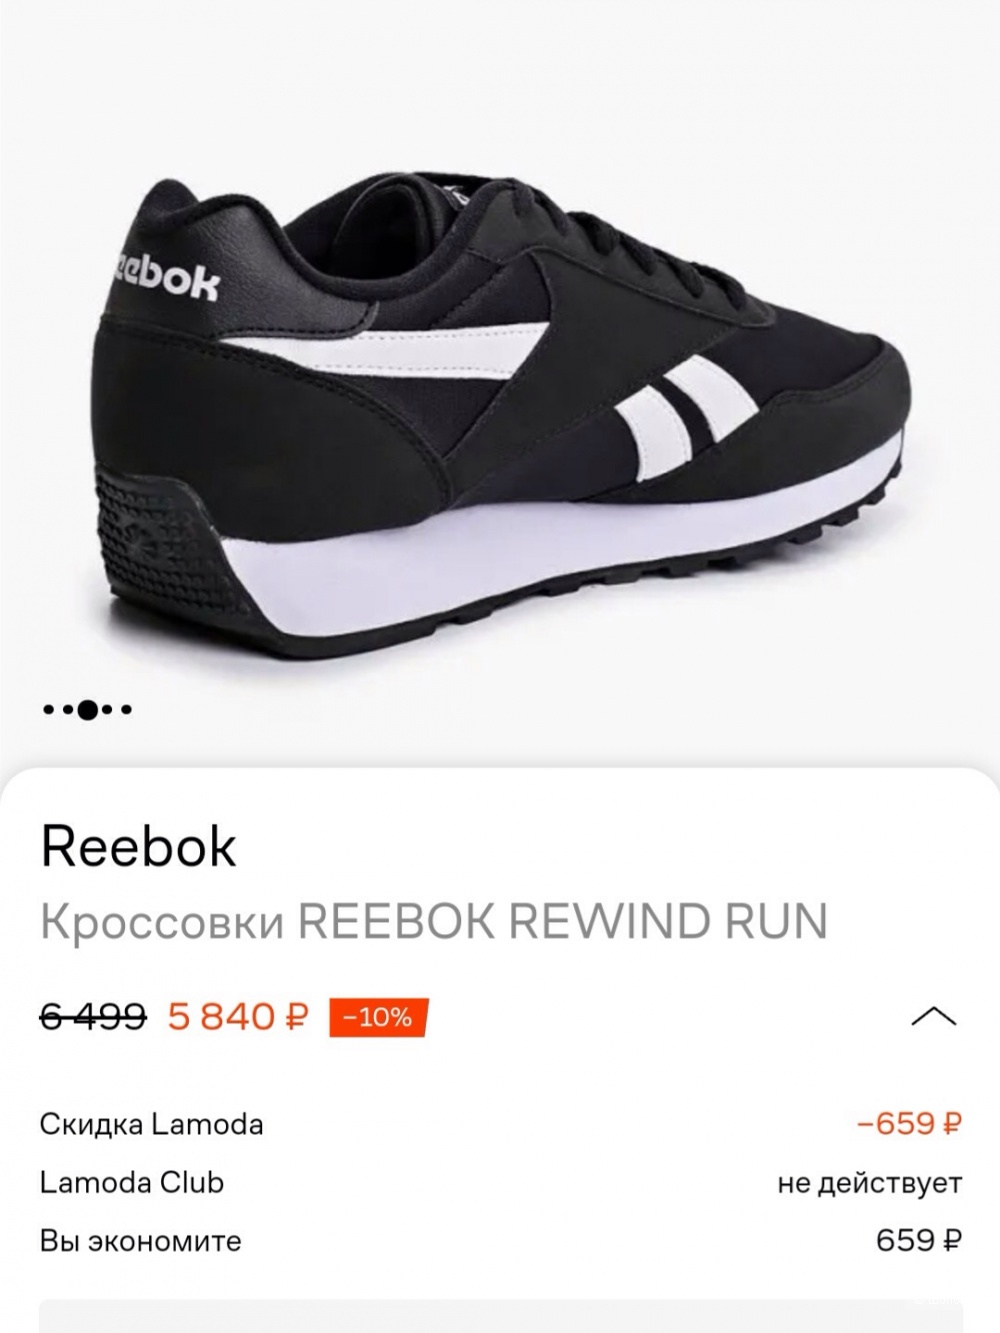 Кроссовки Reebok Rewind run, размер 38,5 RU/7,5 USA/ 5 UK